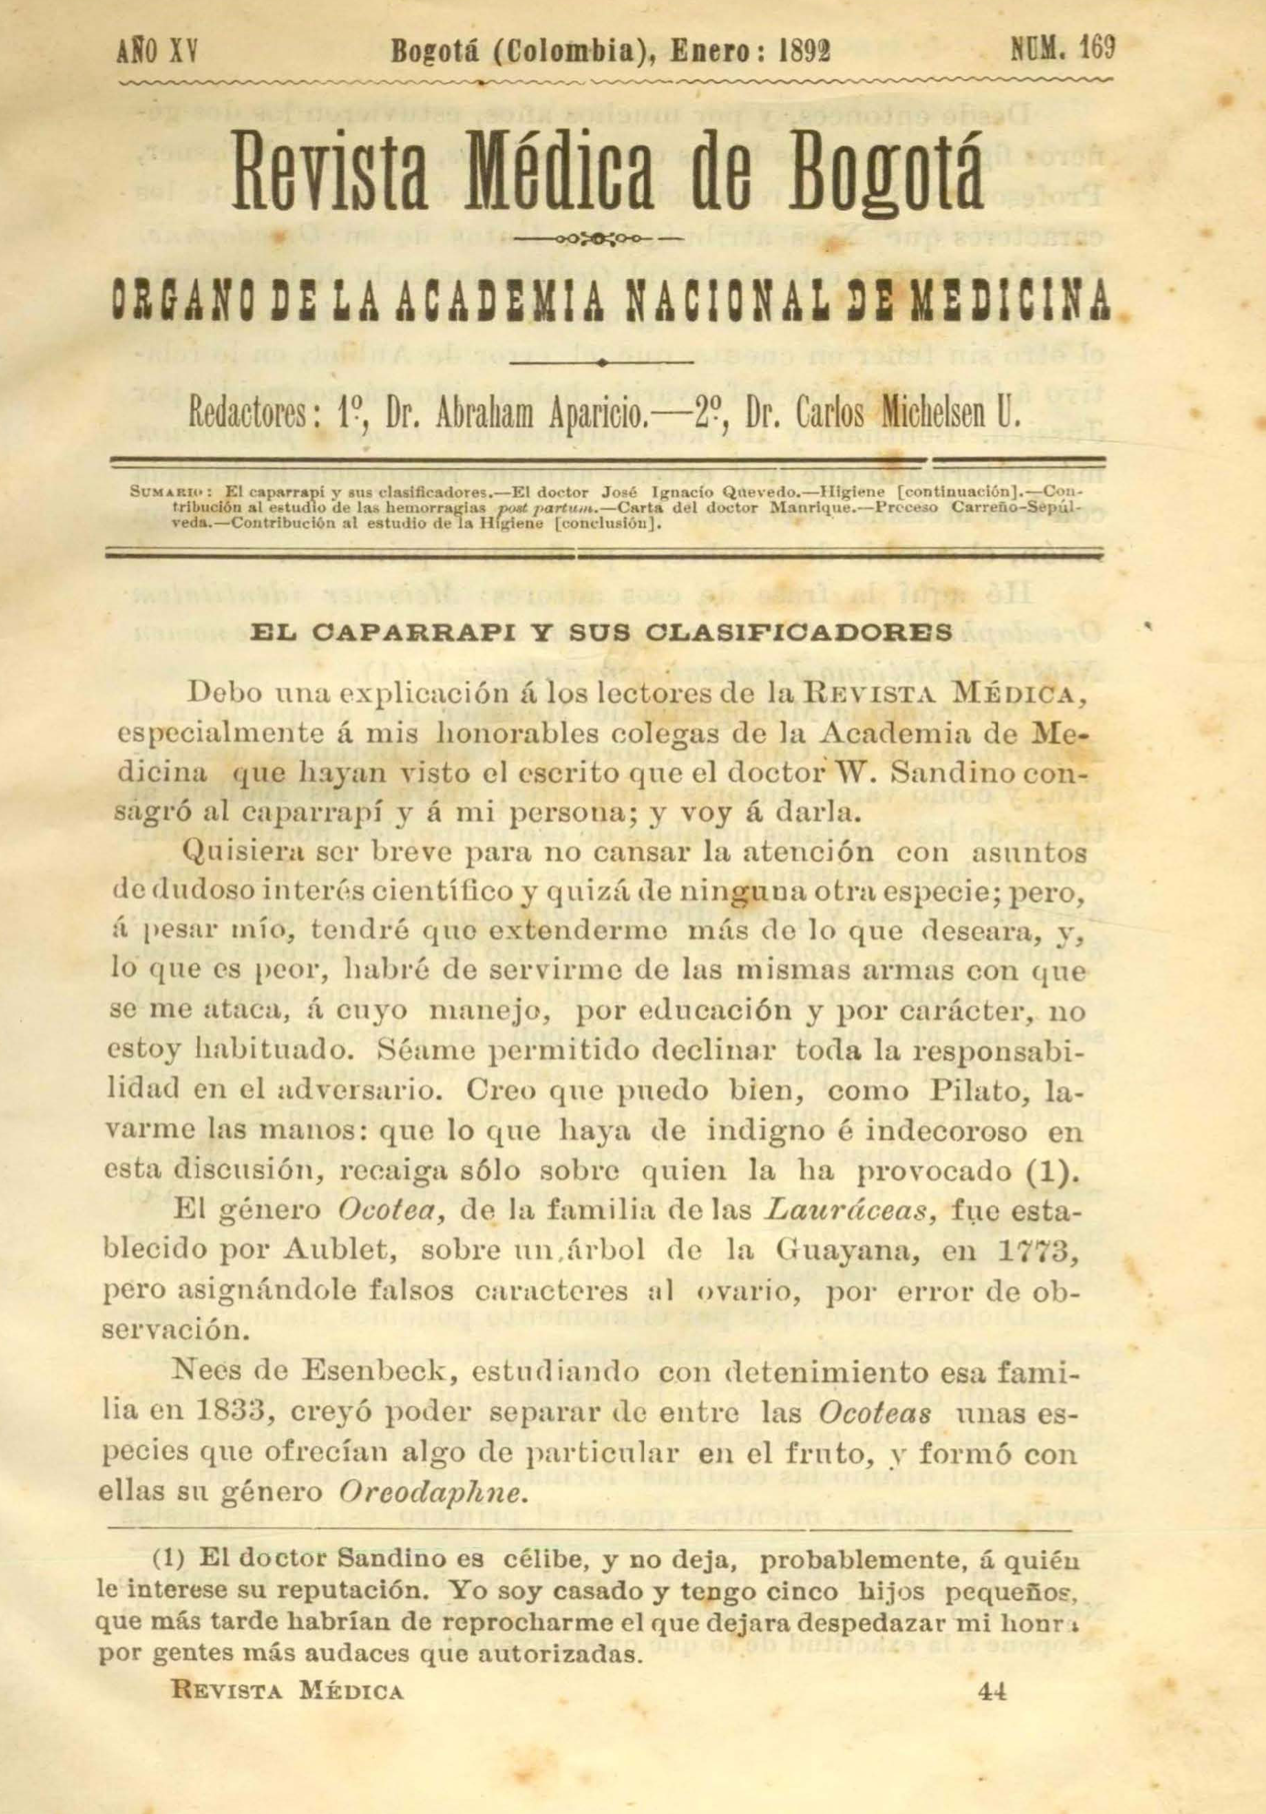 					Ver Vol. 15 Núm. 169 (1892): Revista Médica de Bogotá. Serie 15. Enero de 1892. Núm. 169
				